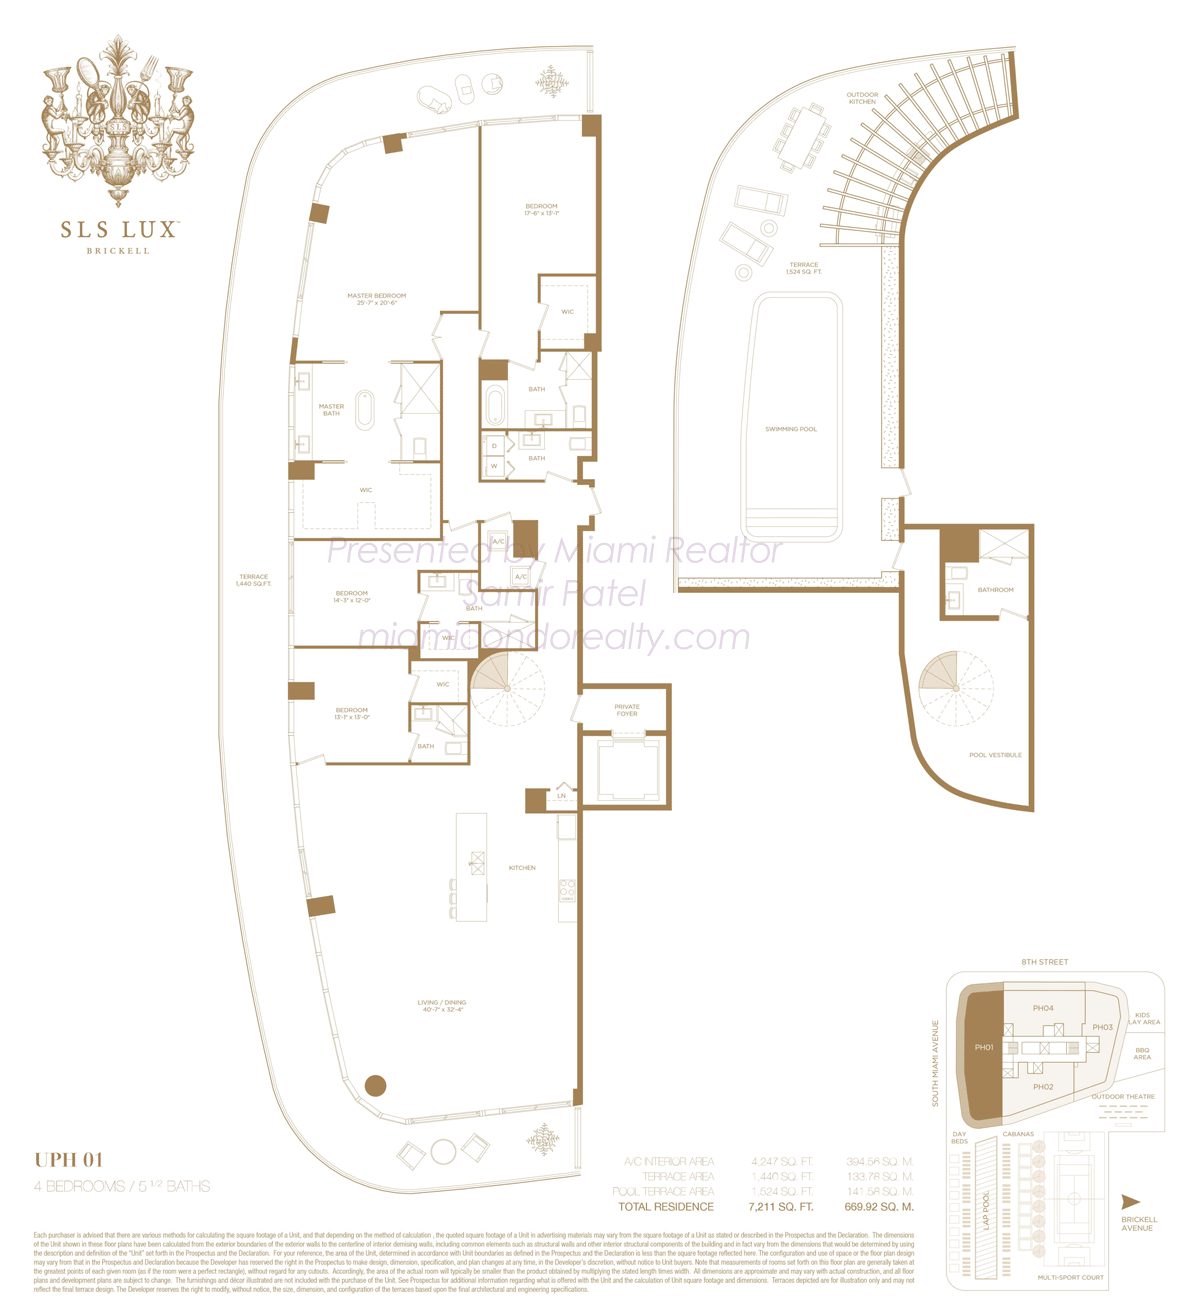 SLS LUX Brickell Upper Penthouse 01 Floorplan